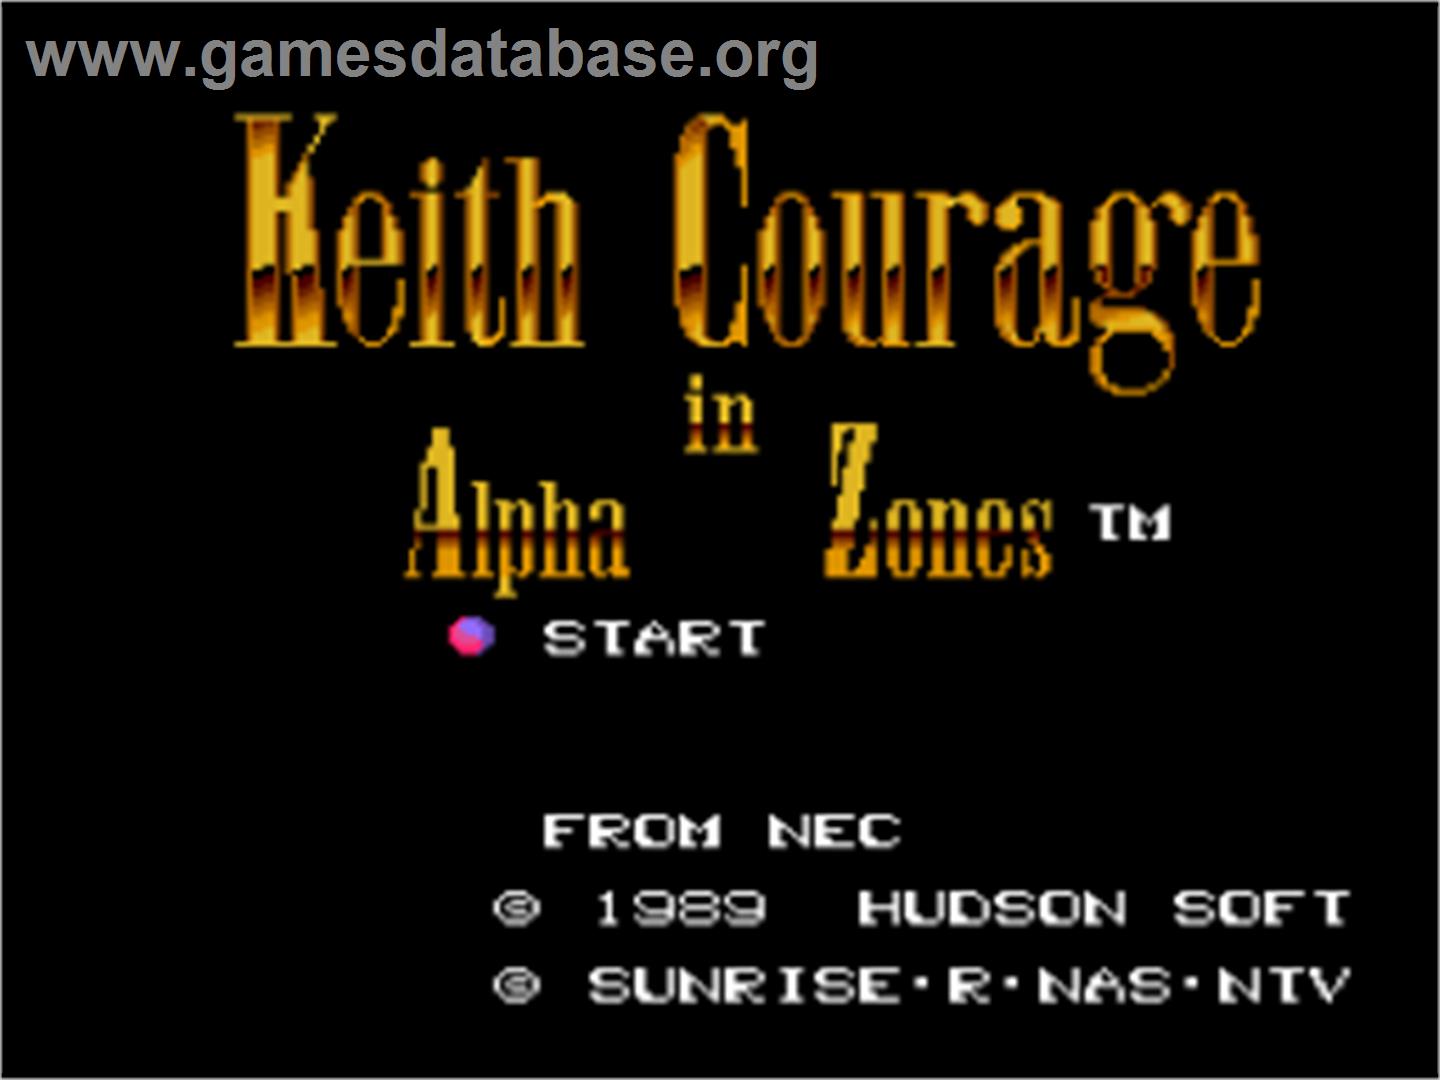 Keith Courage in Alpha Zones - NEC TurboGrafx-16 - Artwork - Title Screen